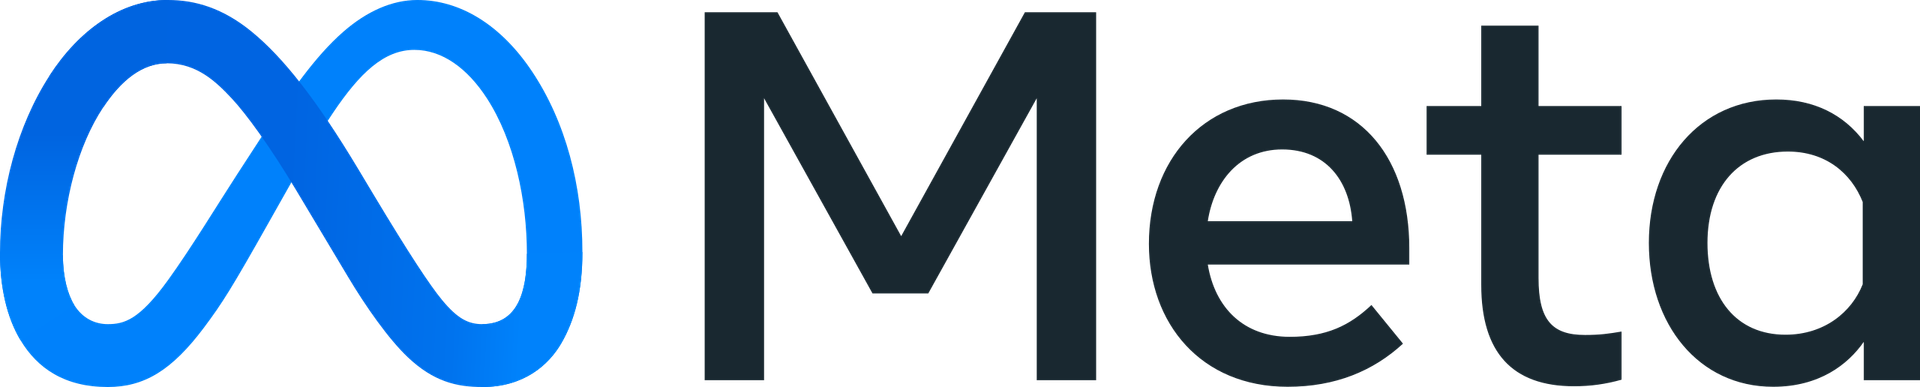 Meta Platforms Inc. logo.svg fuchs&maus